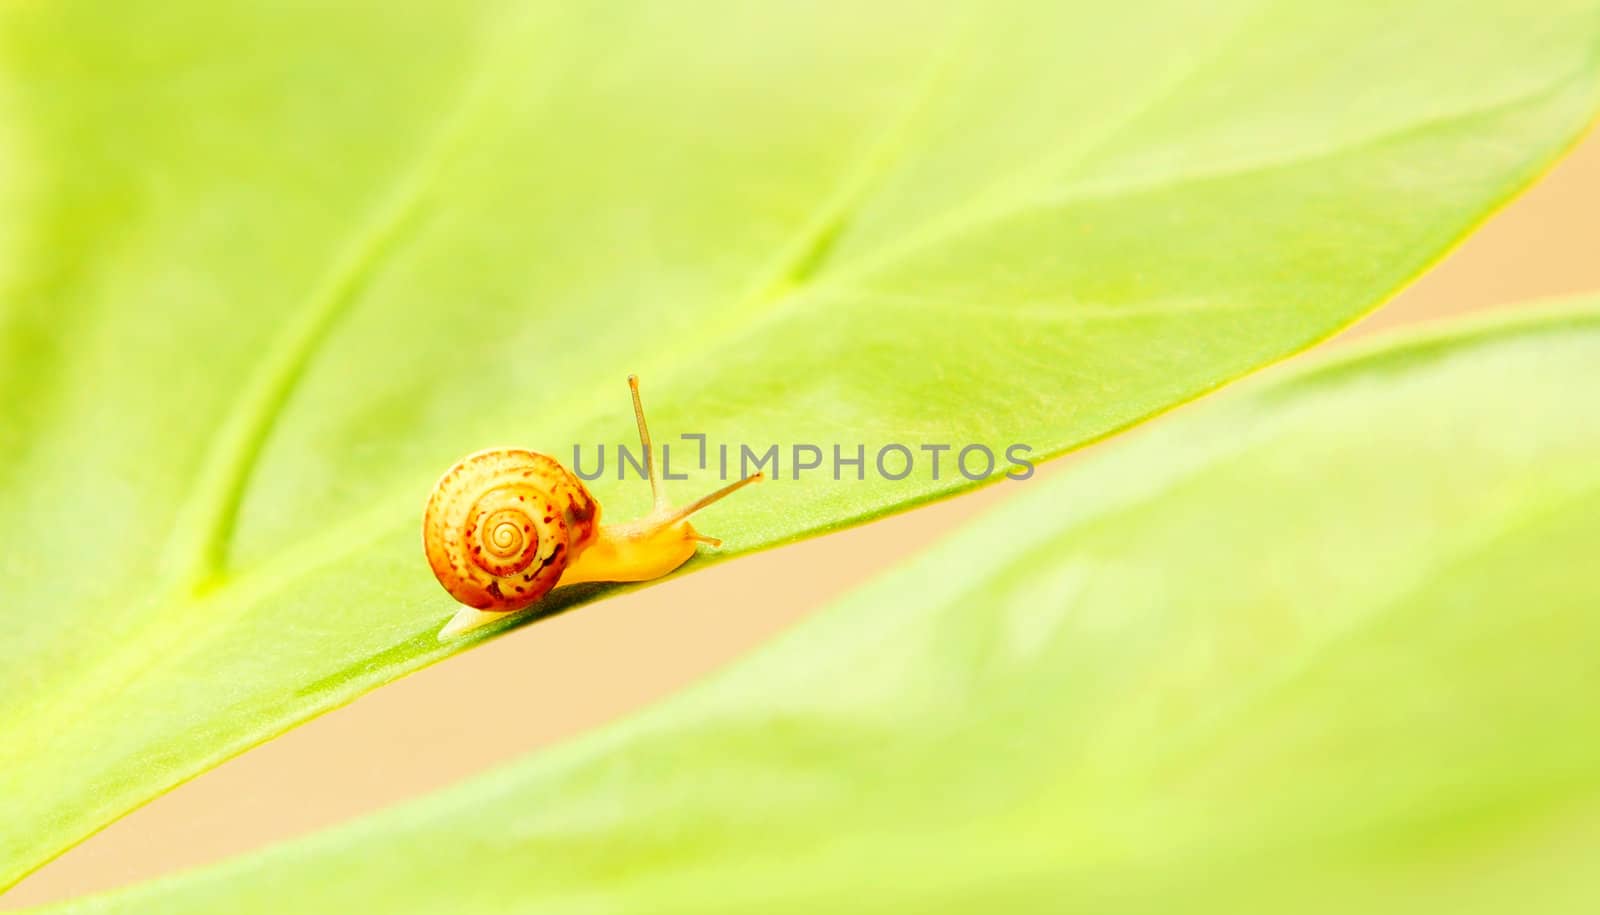 Little snail by Anna_Omelchenko